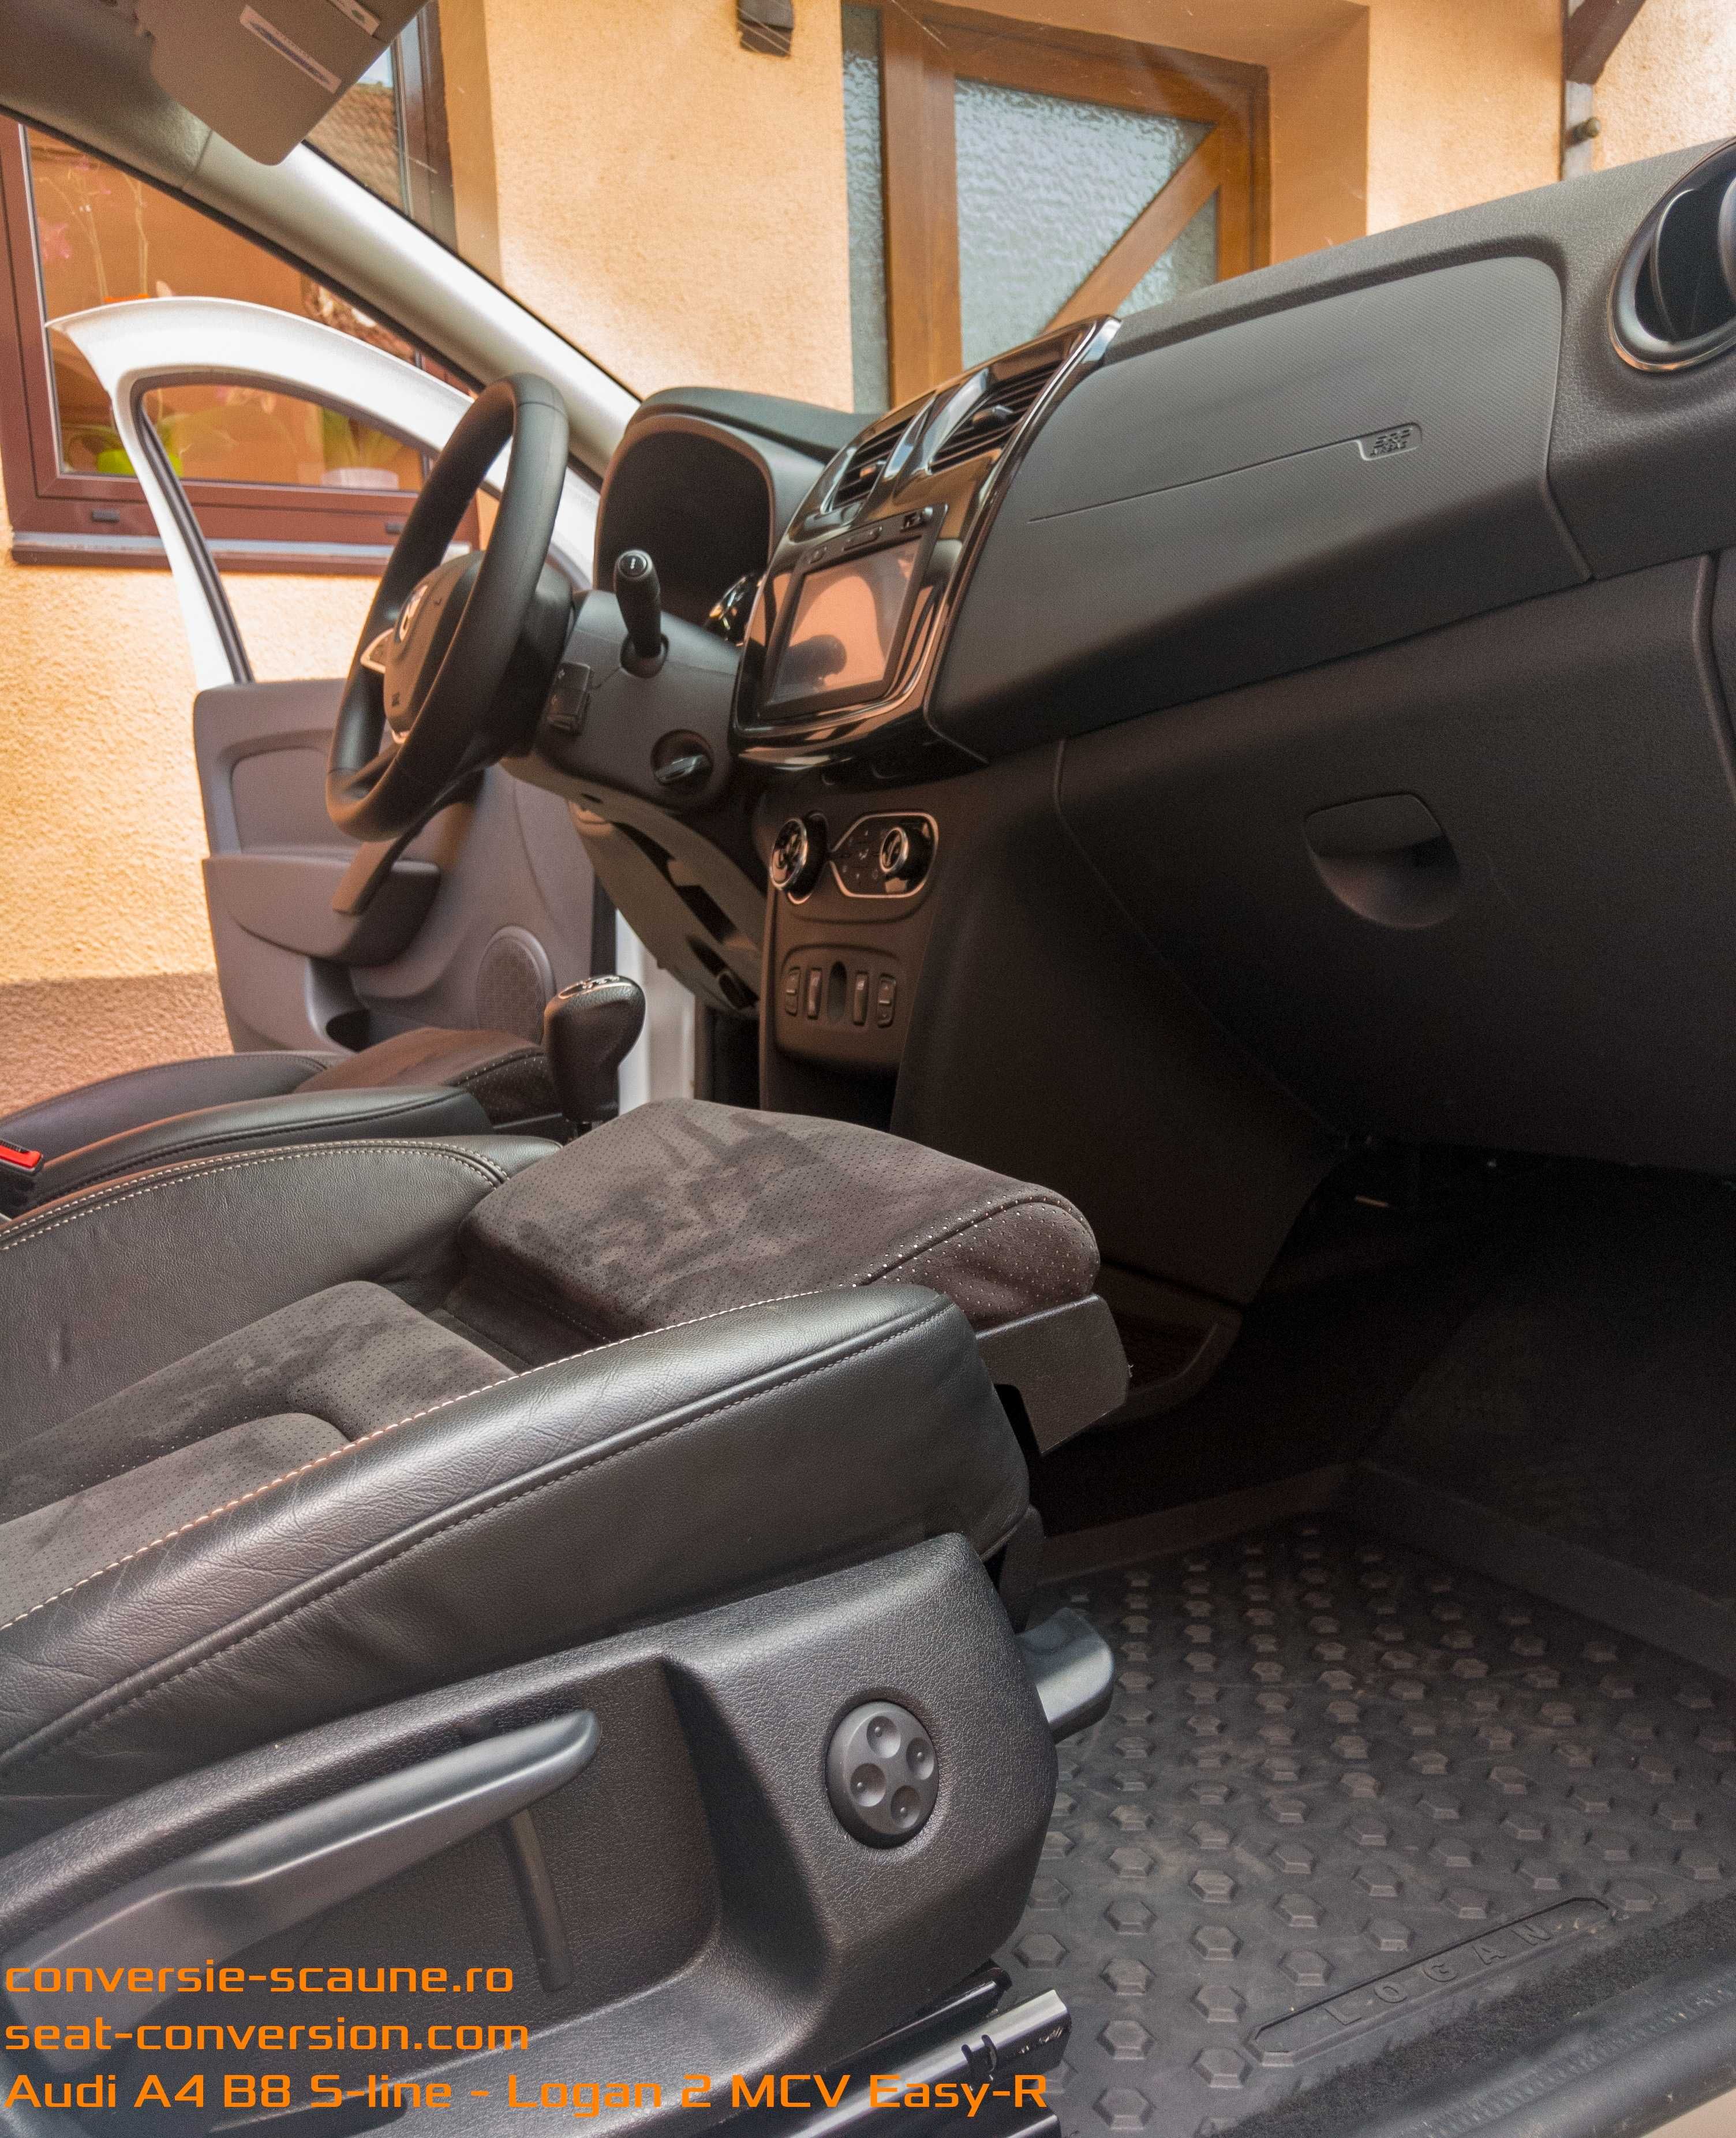 Sistem conversie scaune compatibil Audi A4 B8 A5- Logan Duster Sandero